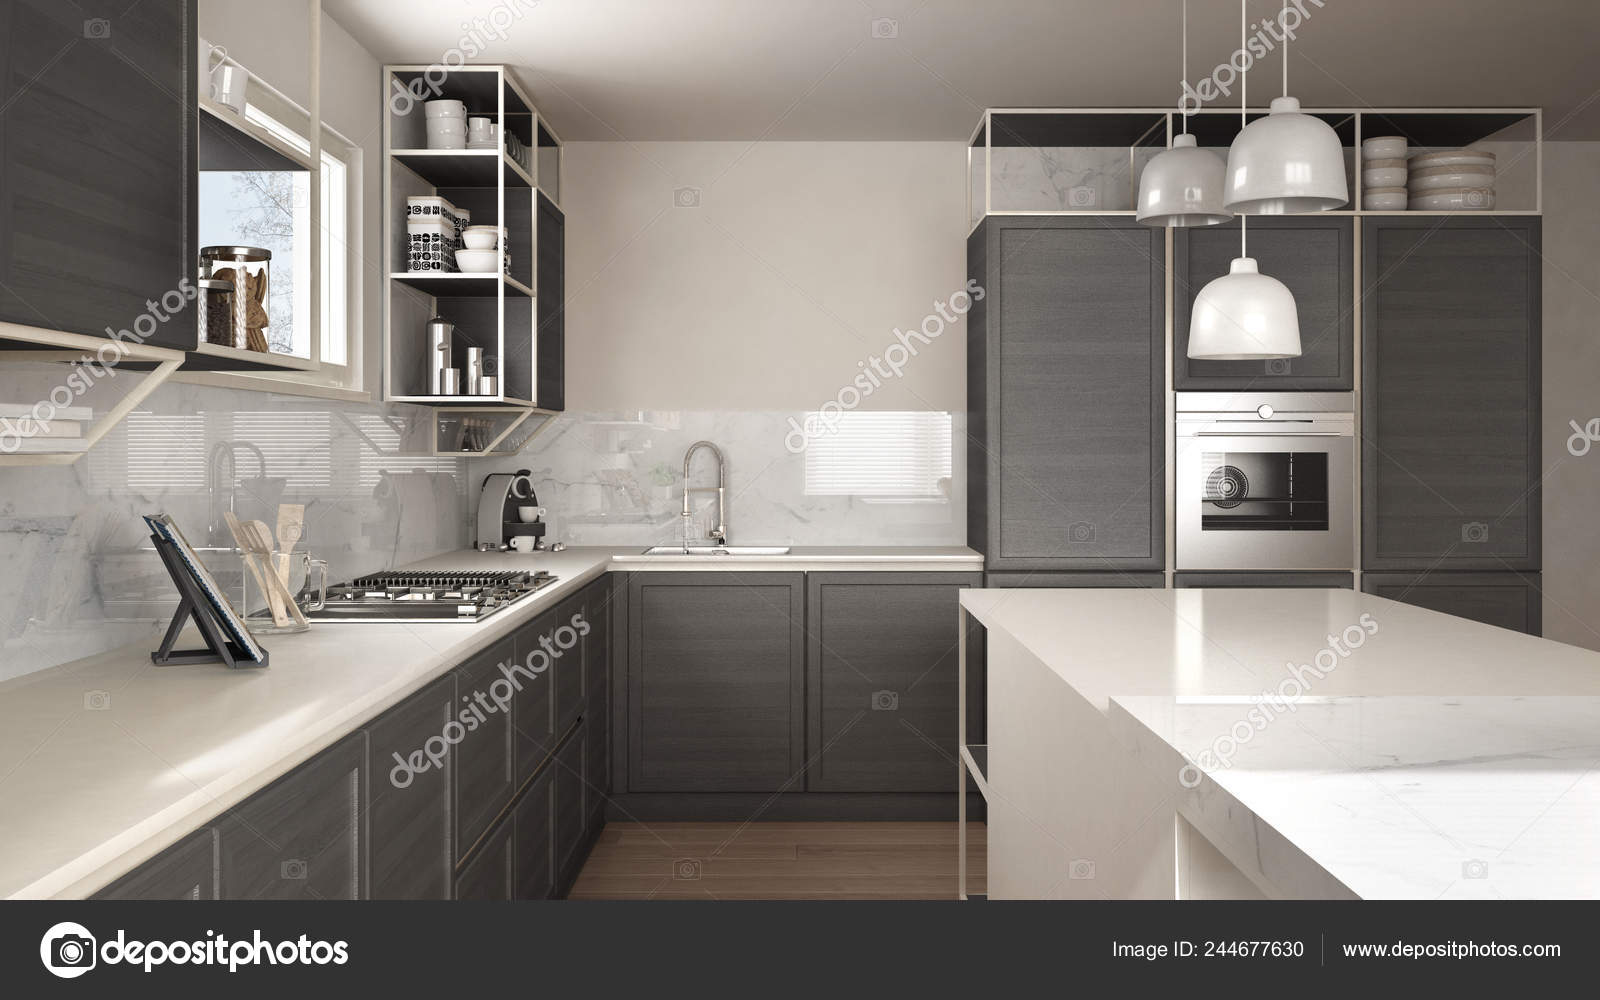 https://st4.depositphotos.com/1152281/24467/i/1600/depositphotos_244677630-stock-photo-modern-white-gray-kitchen-wooden.jpg